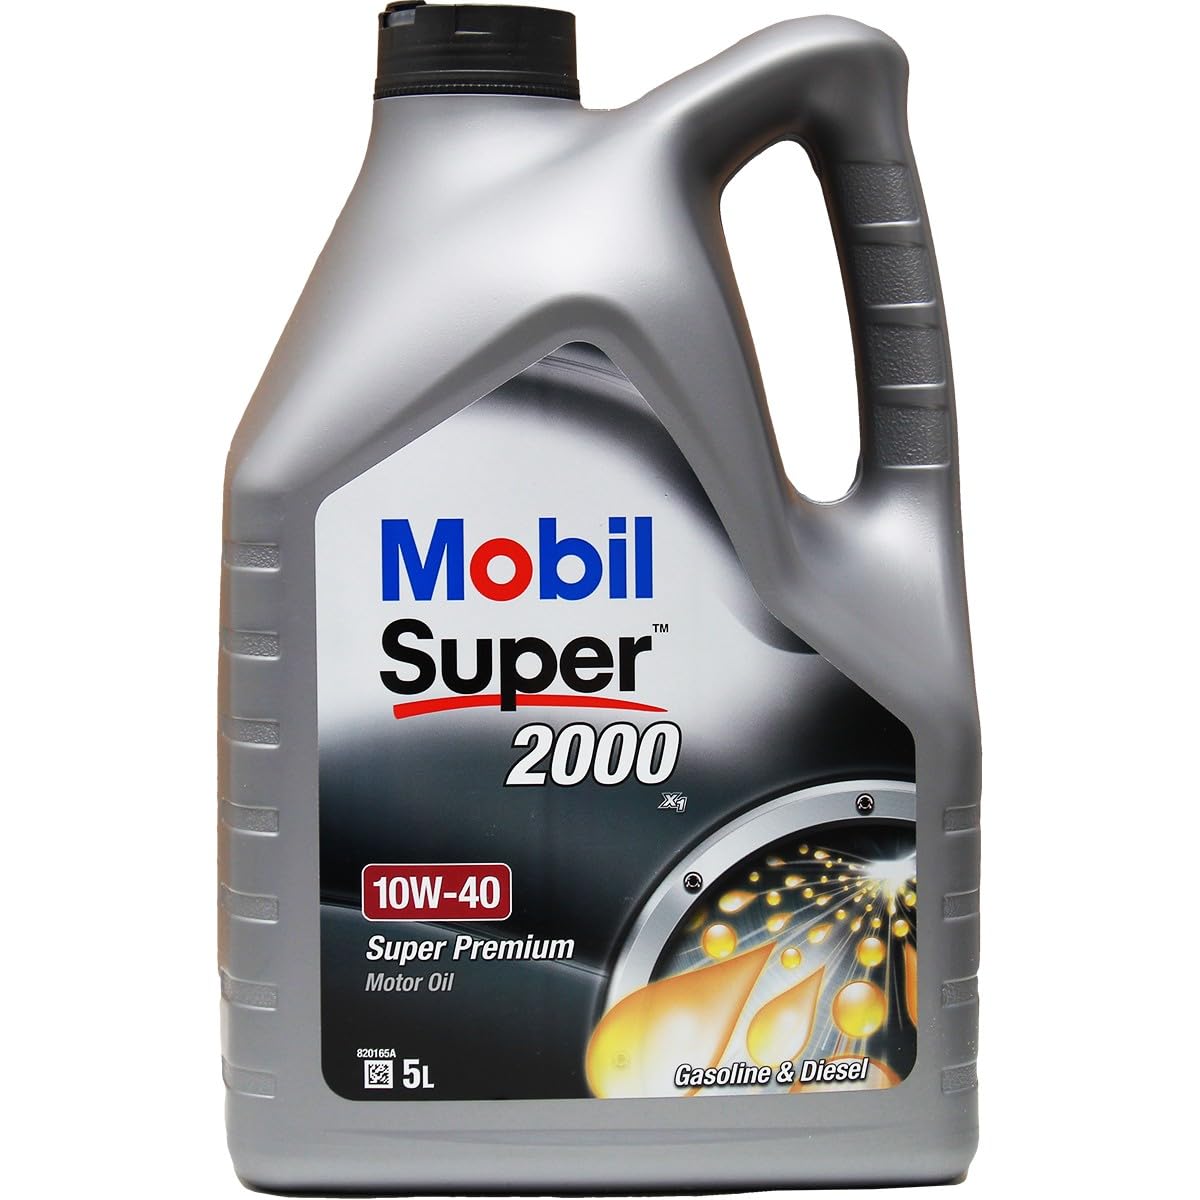 Mobil Super 2000 X1 10W-40 Engine Oil, 5 Liters von Mobil